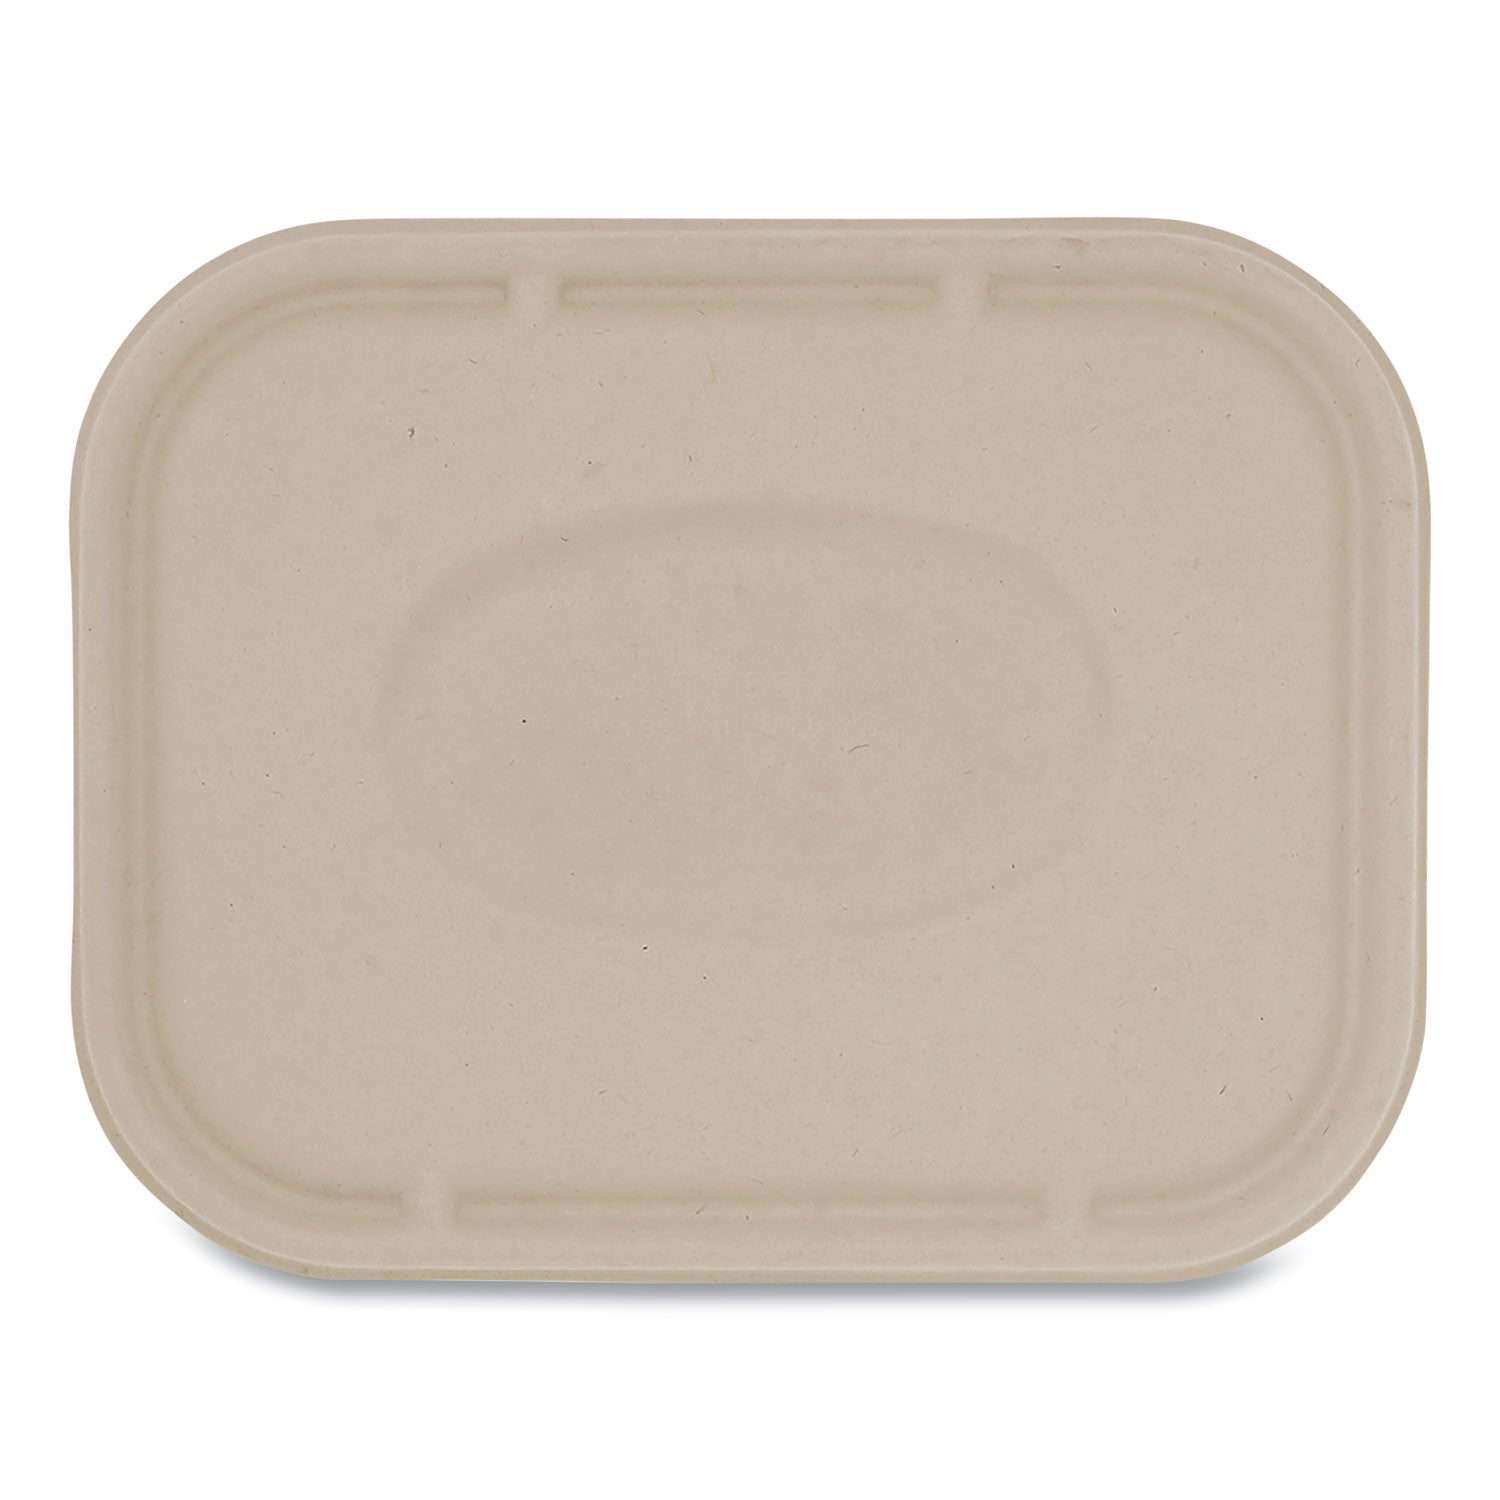 fiber-lids-for-fiber-containers-78-x-101-x-05-natural-paper-400-carton_wortrlsc10lf - 1